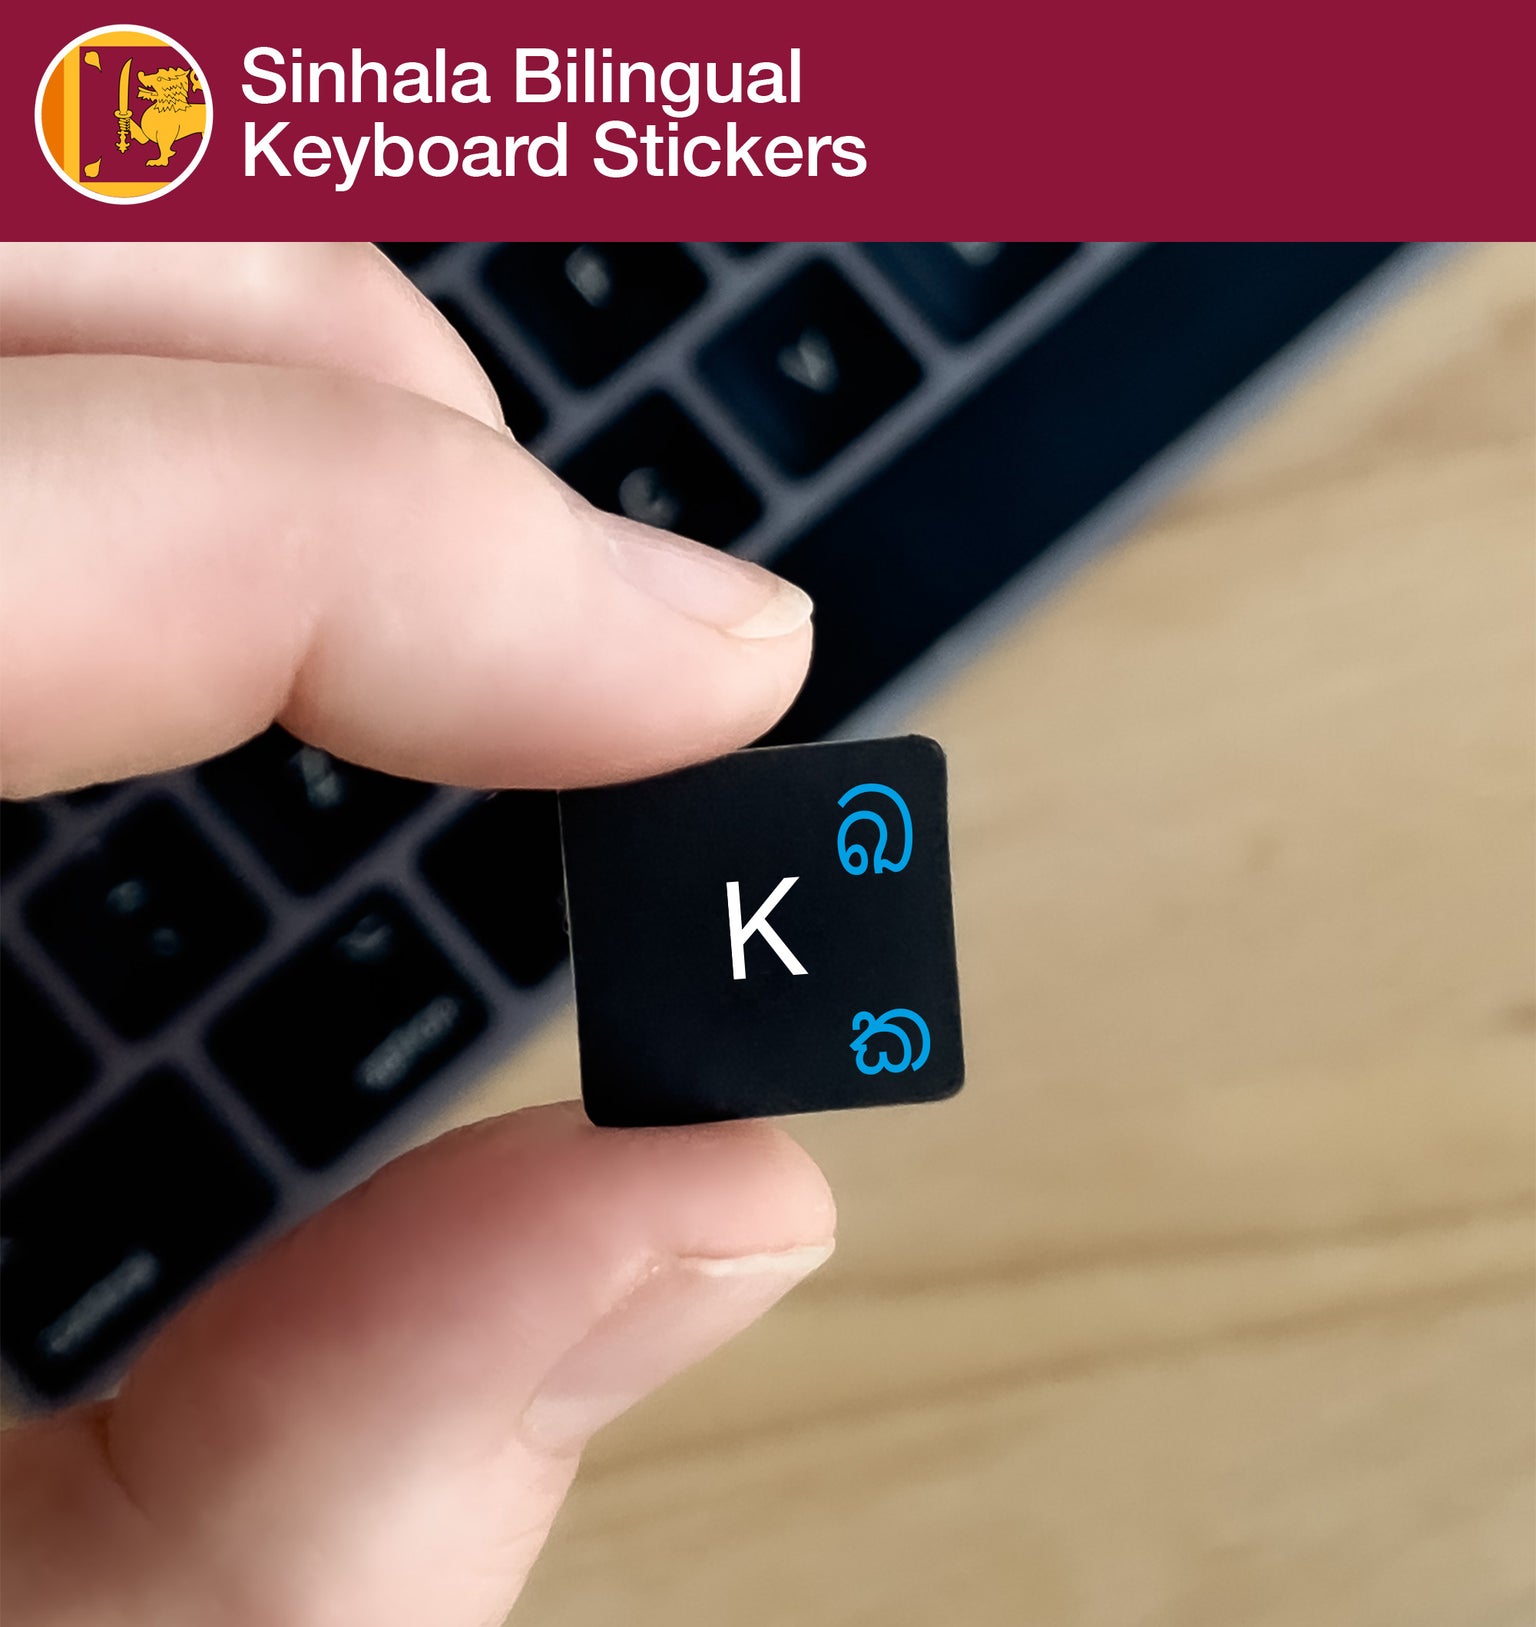 Sinhala Bilingual Keyboard Stickers with Sinhala layout